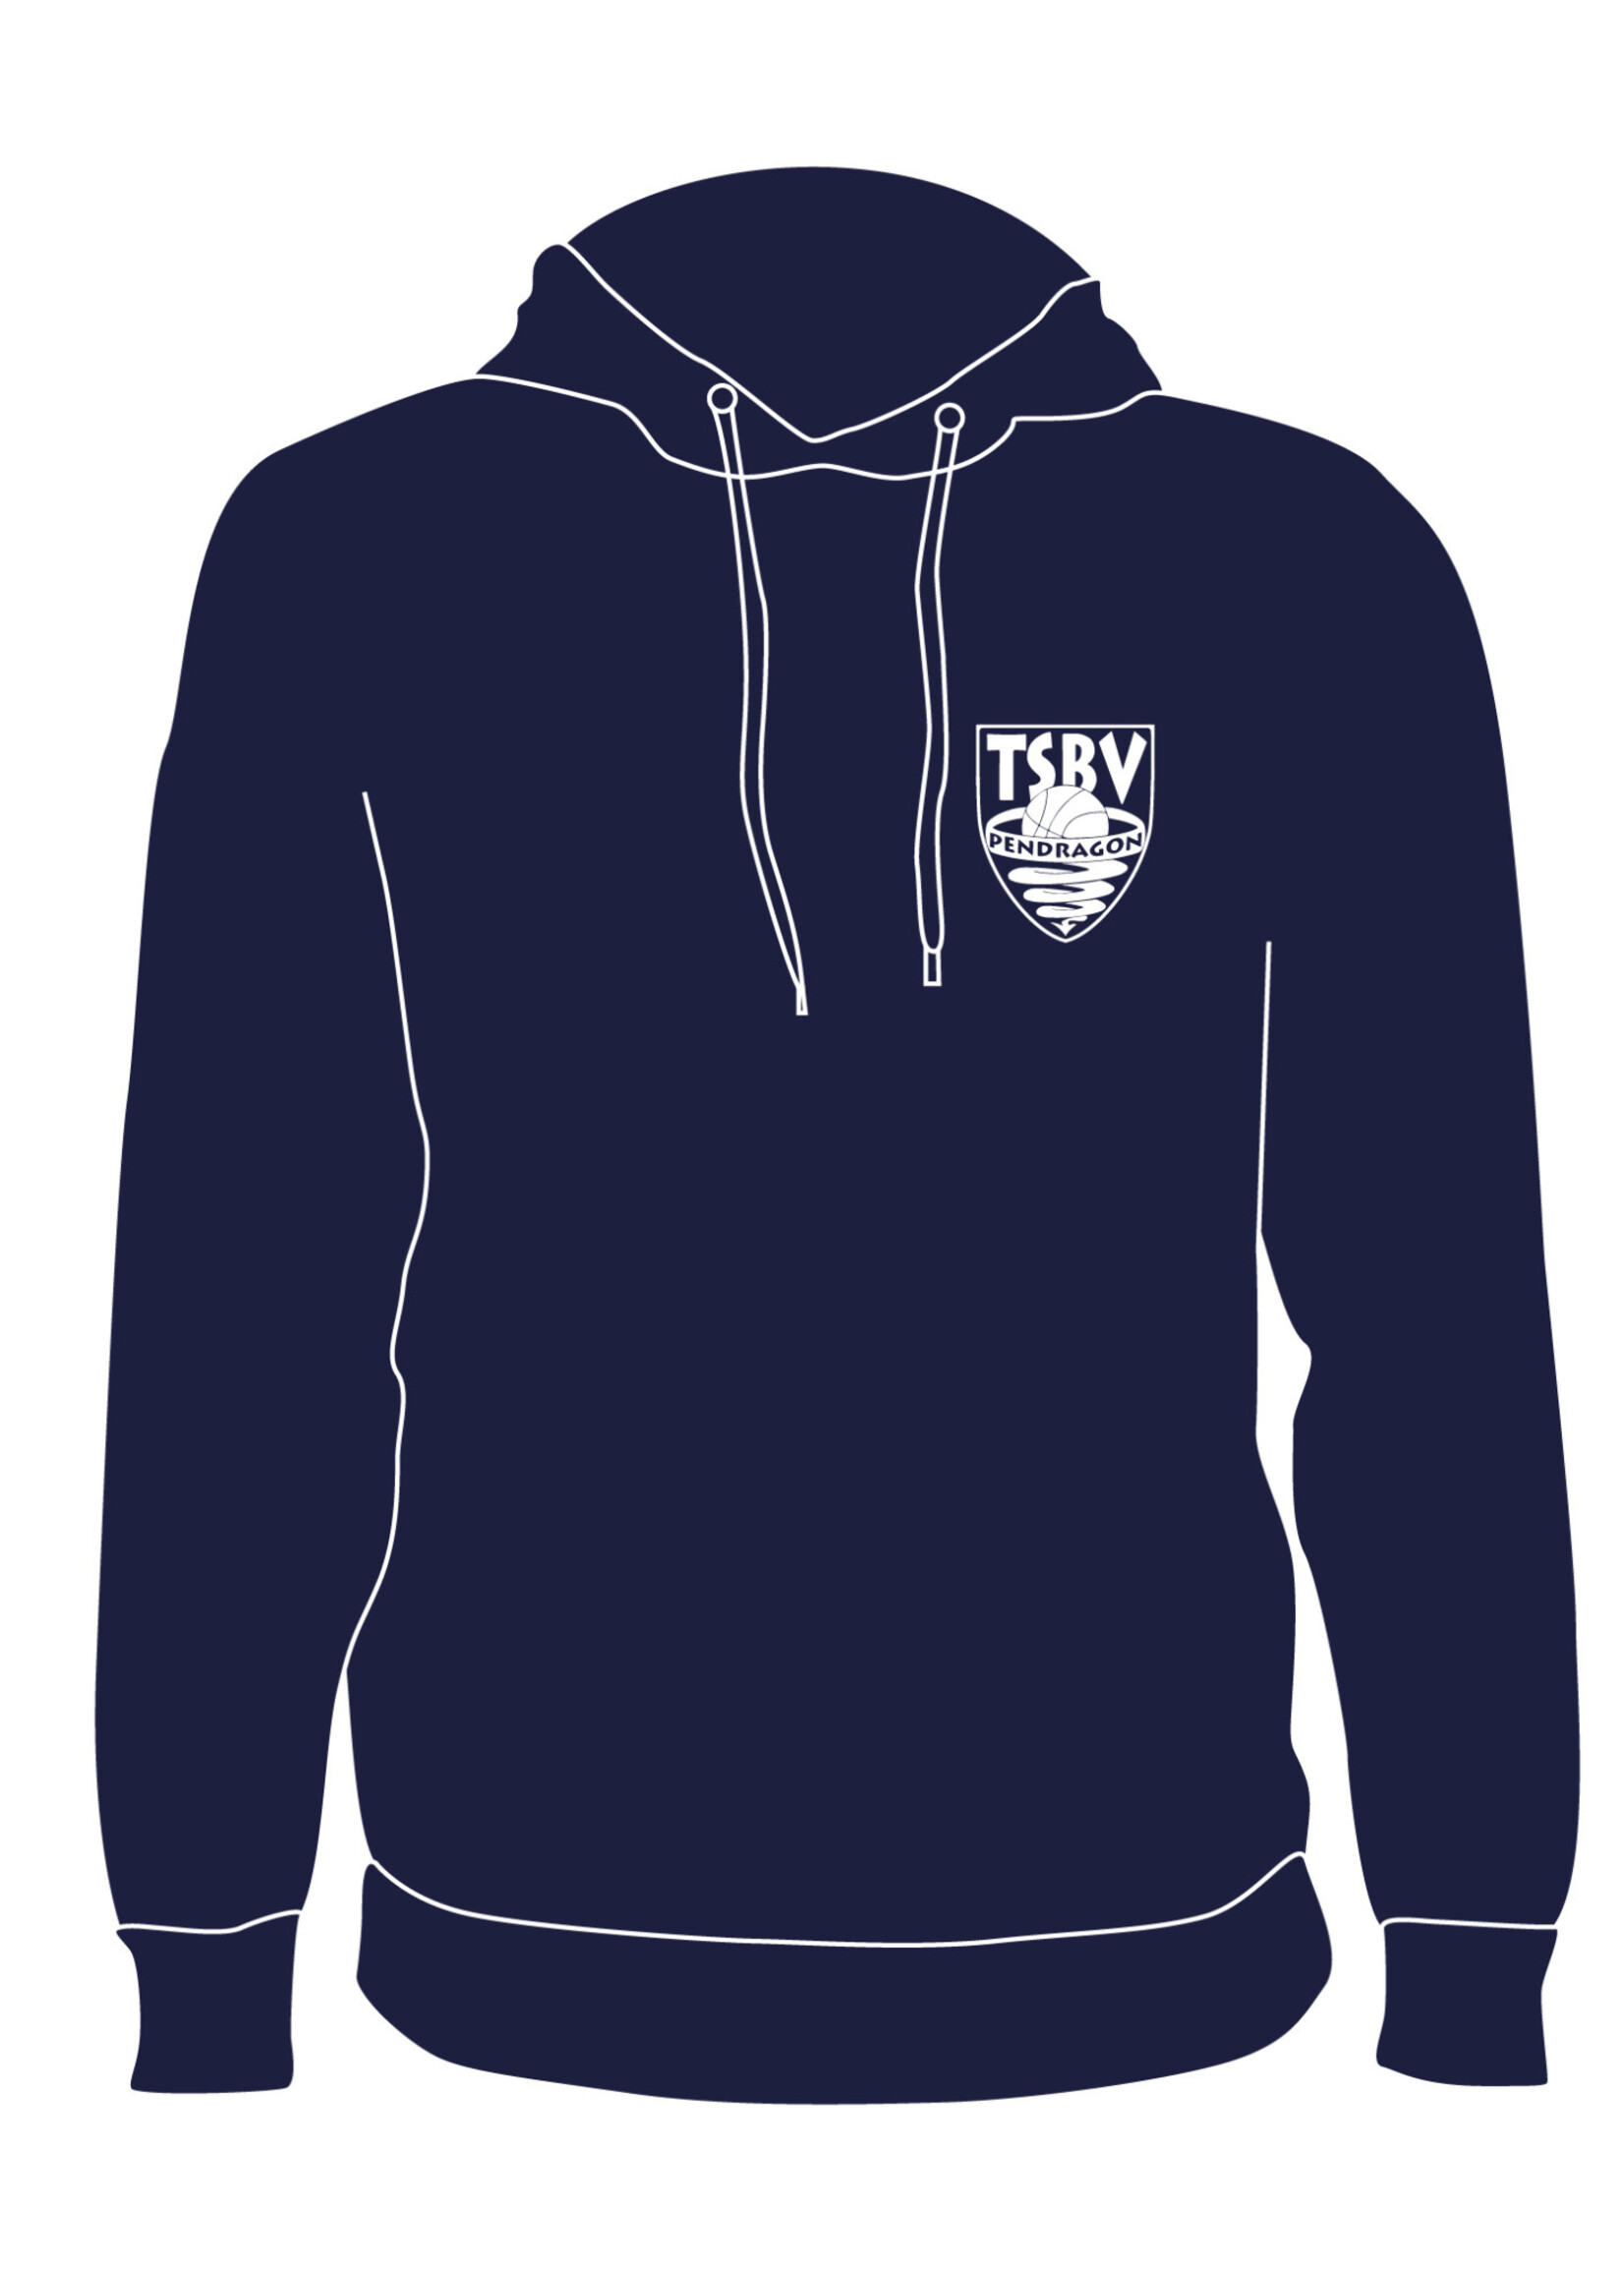 Burned Teamwear T.S.B.V. Pendragon Hoodie Logo Klein Navy